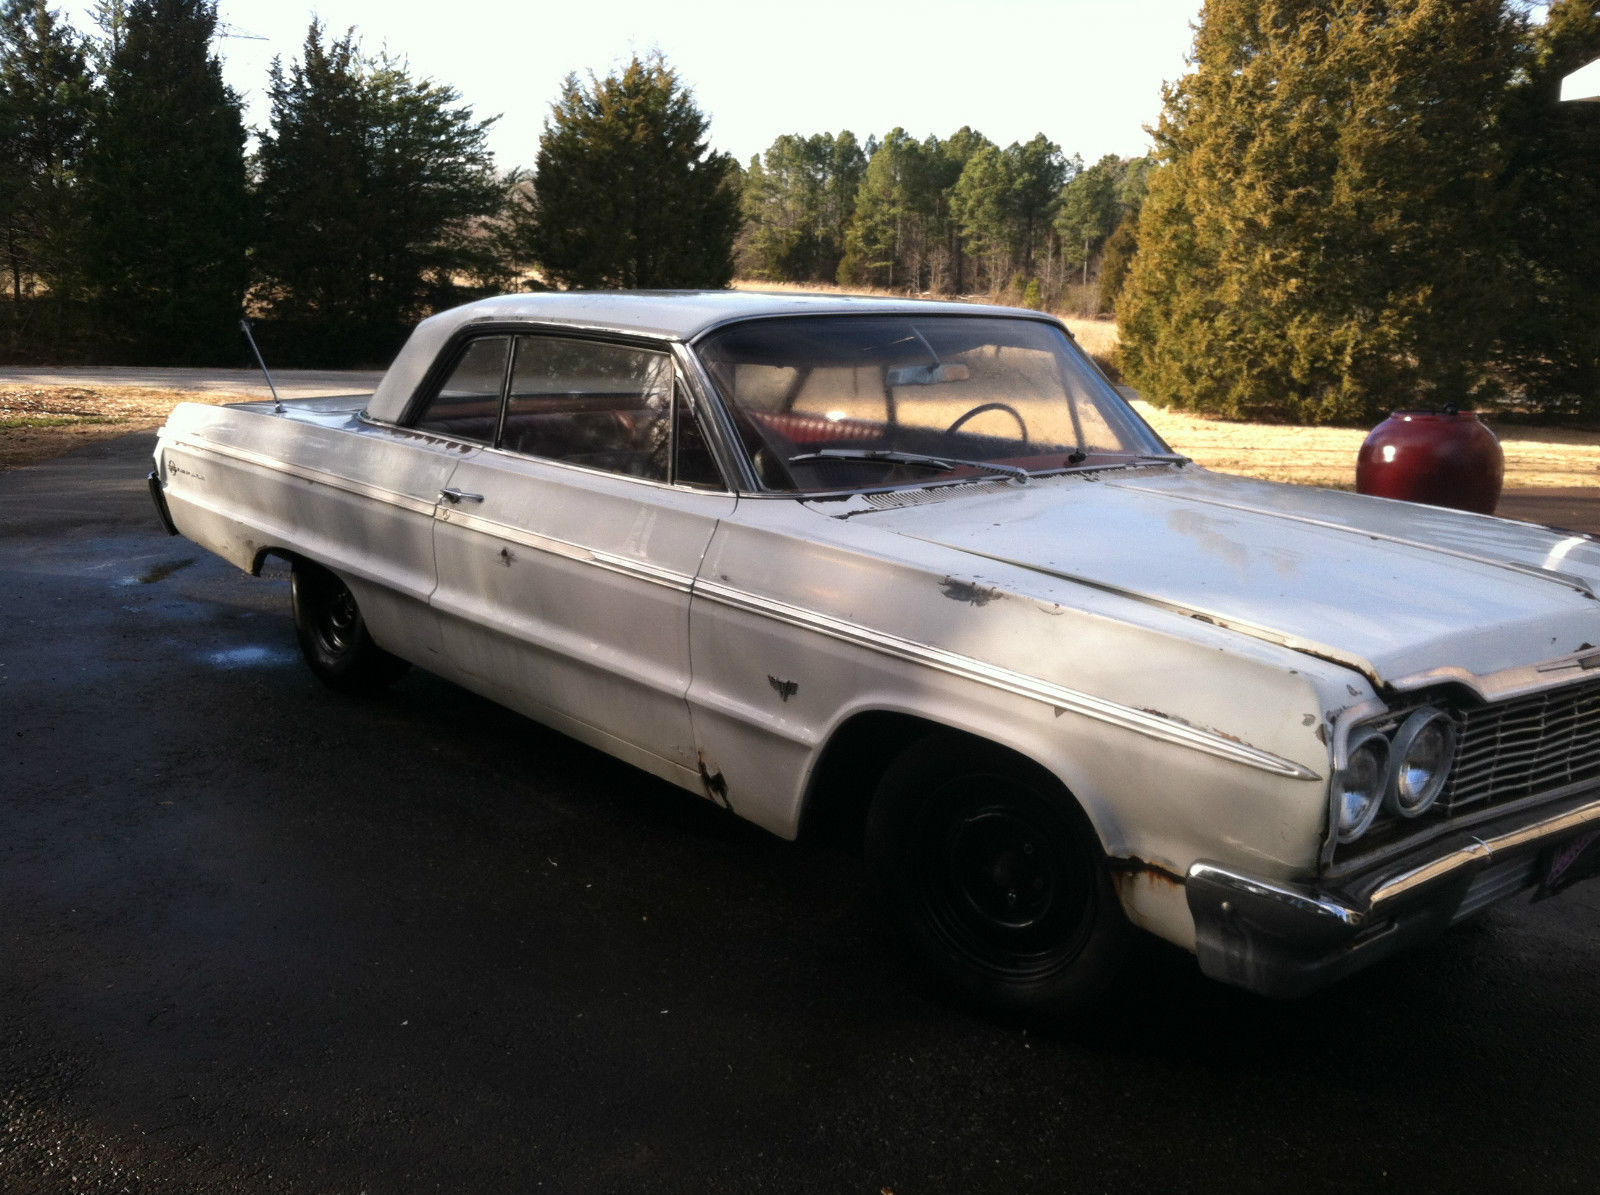 1964 White Impala Ss With Non Original 350 Cid Running